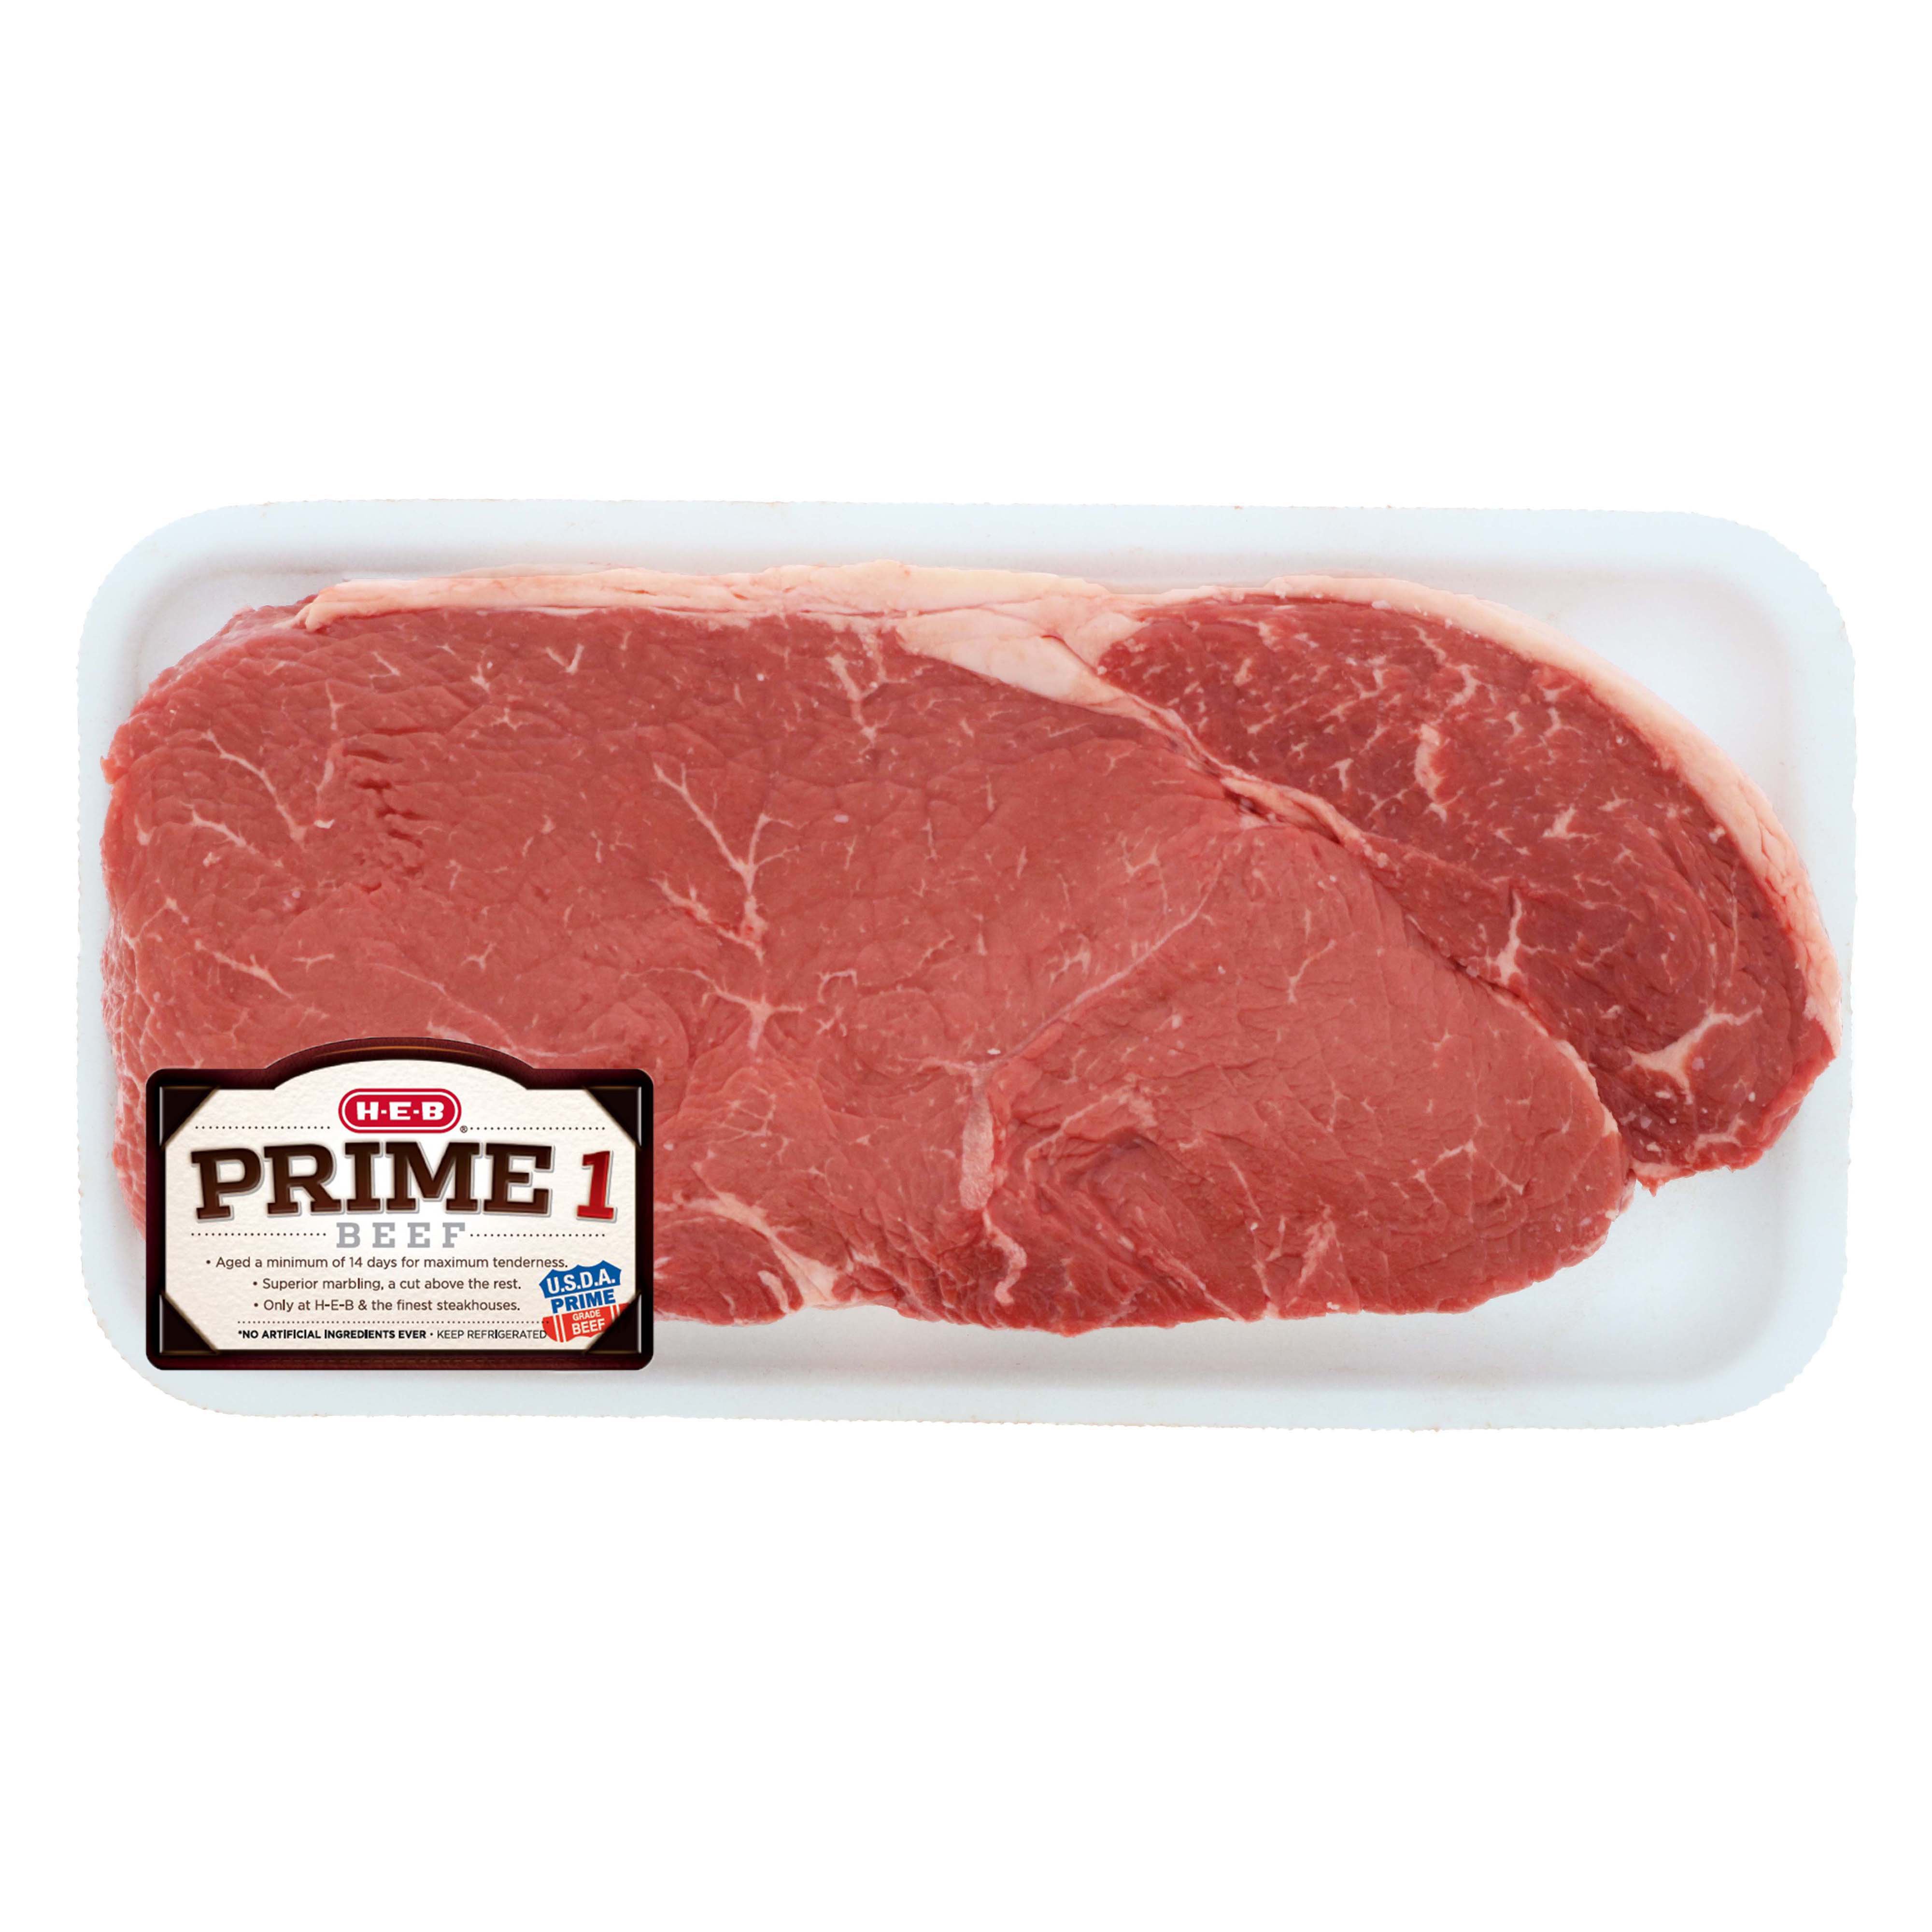 H E B Prime 1 Beef Top Sirloin Steak Boneless Usda Prime Shop Beef